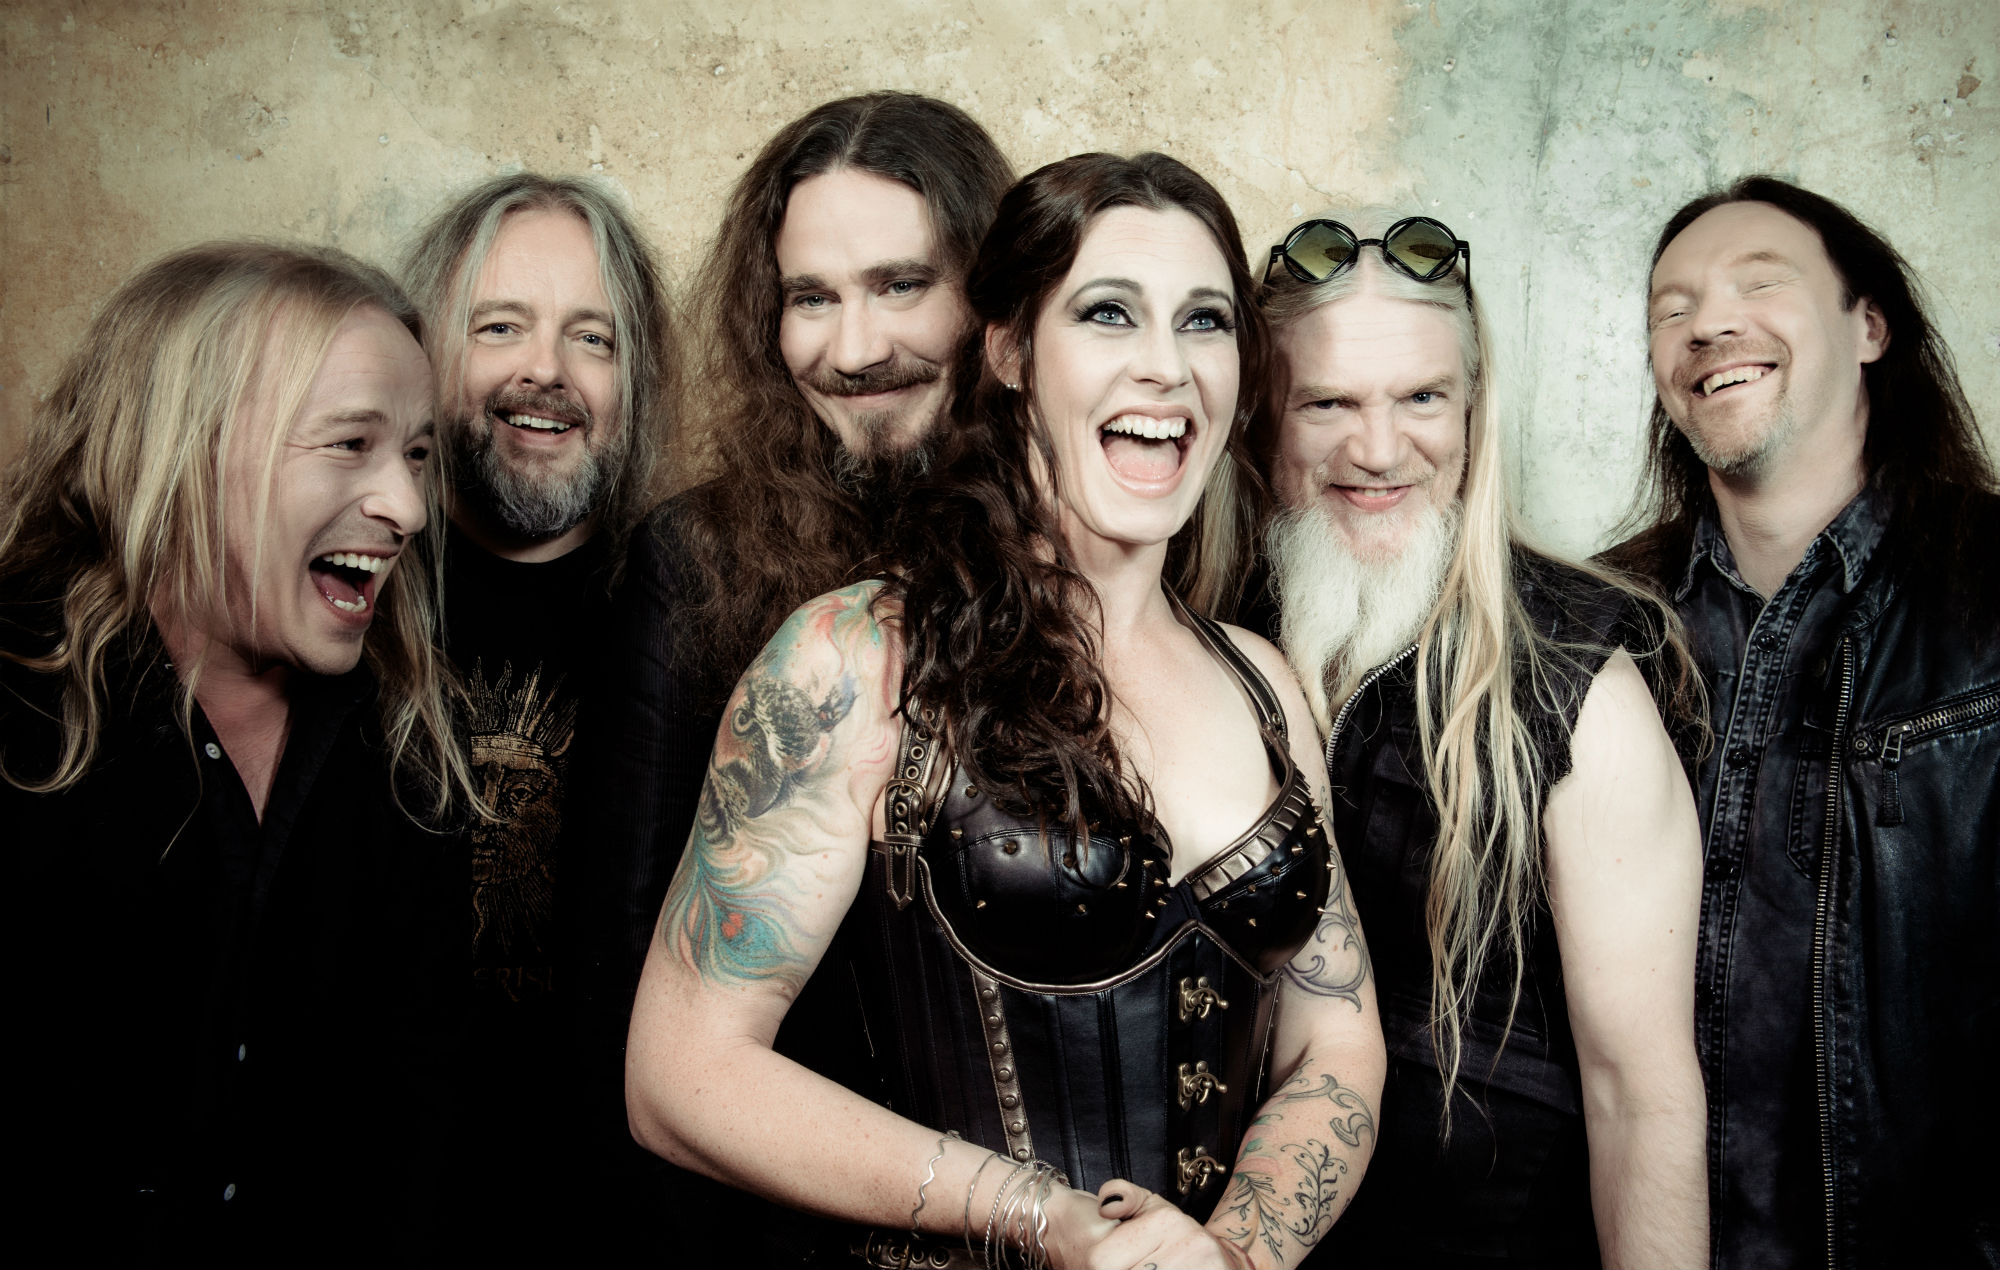 Metal behemoths Nightwish: “David Attenborough wrote to personally decline appearing on our album”